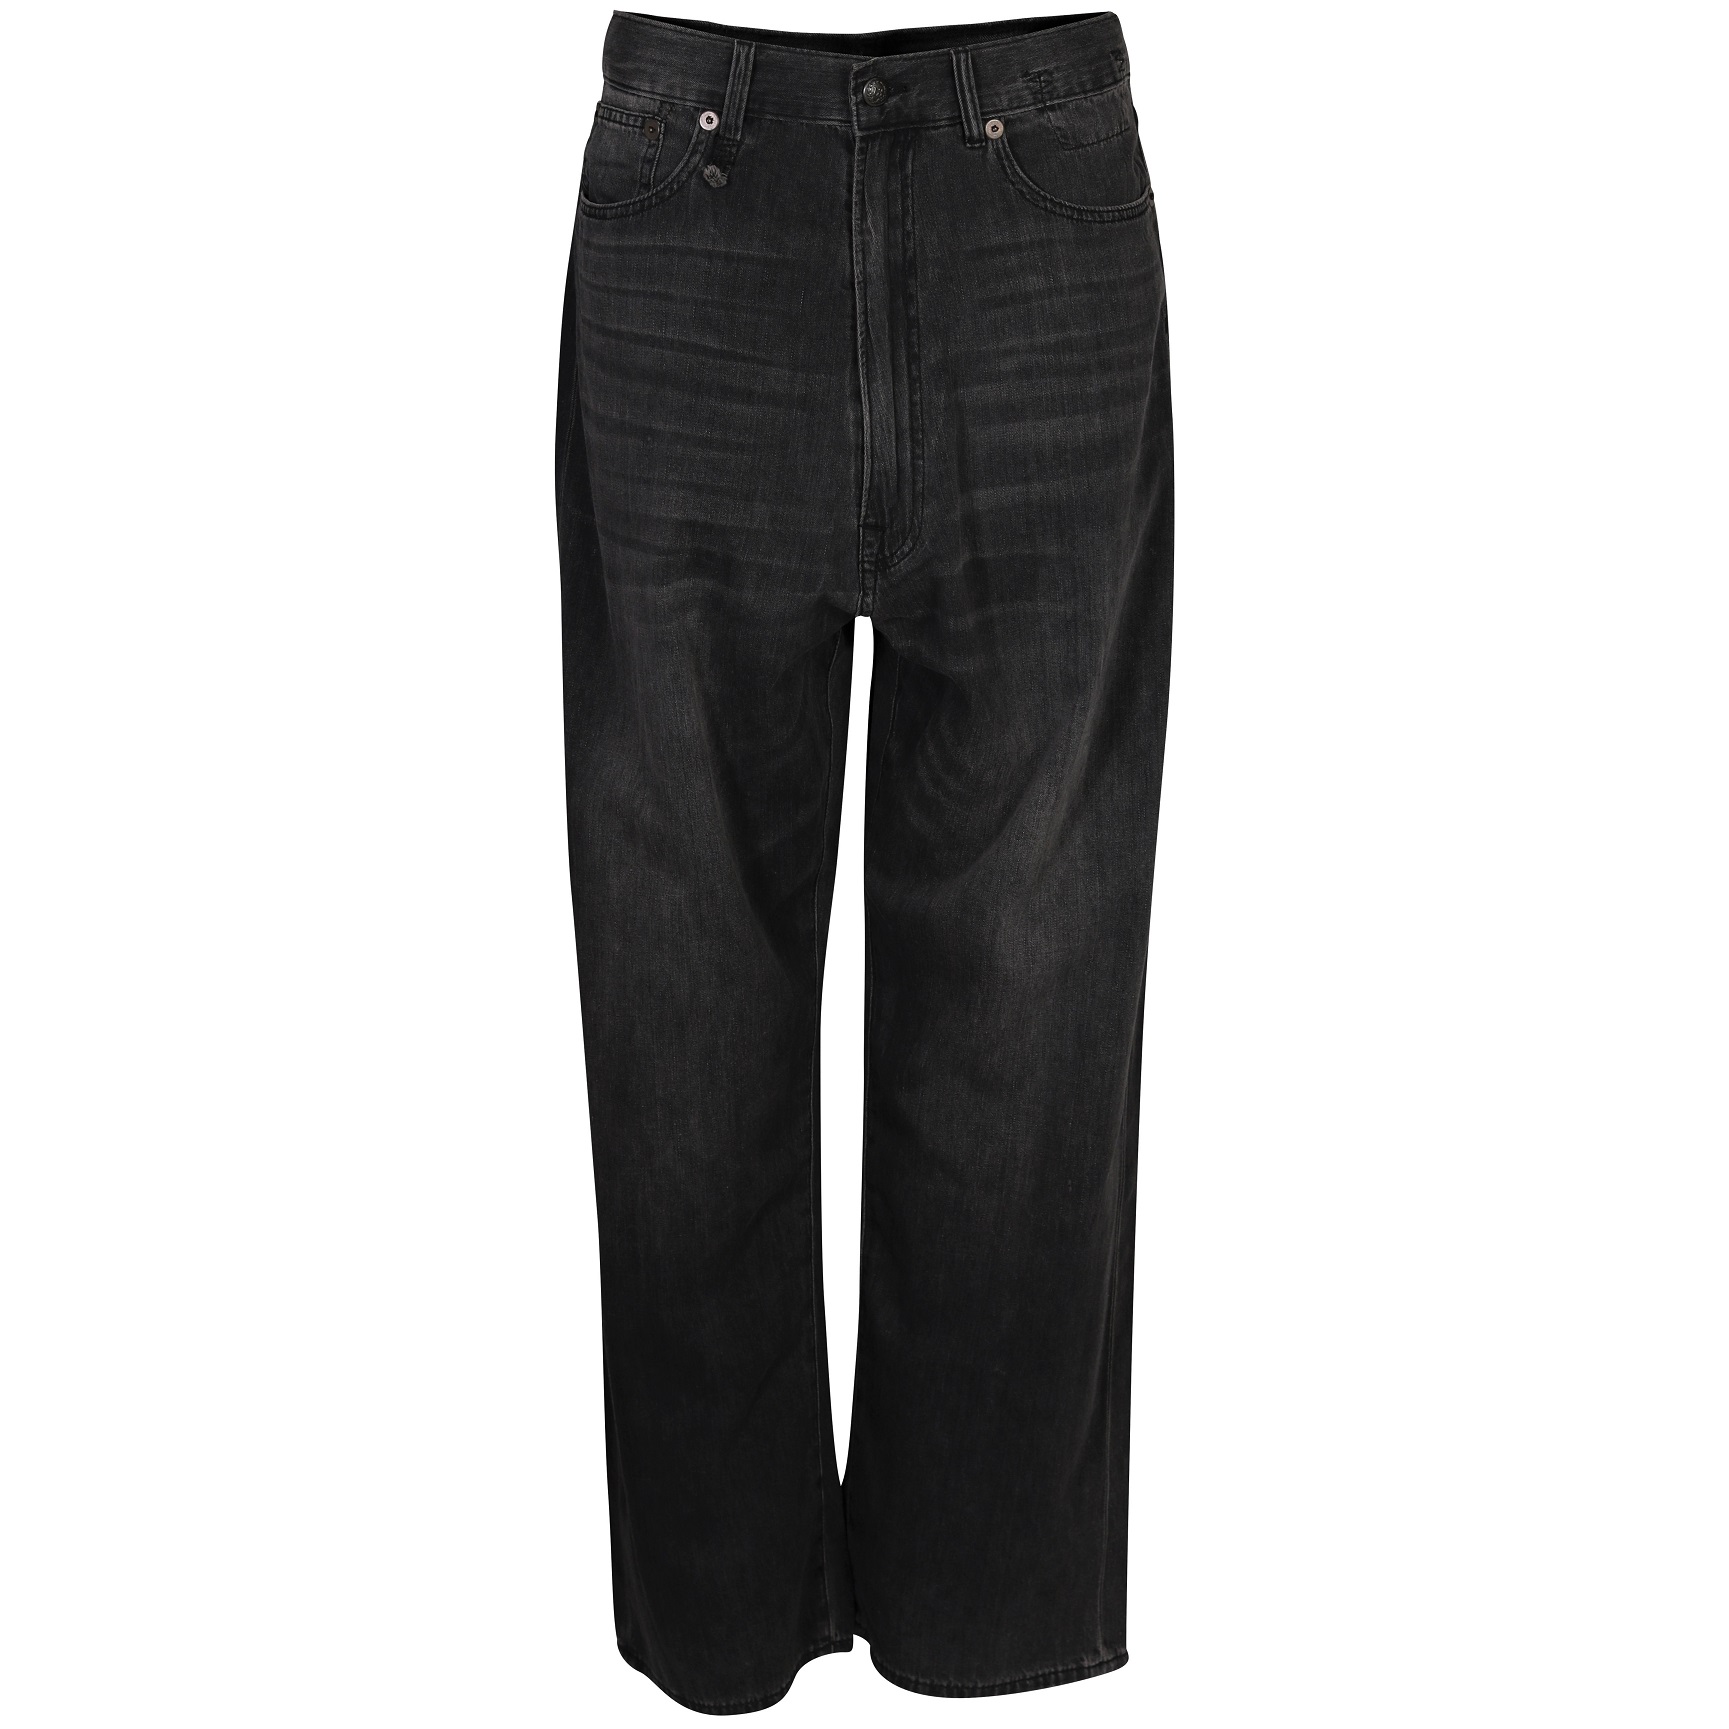 R13 Venti Jeans in Elmore Black